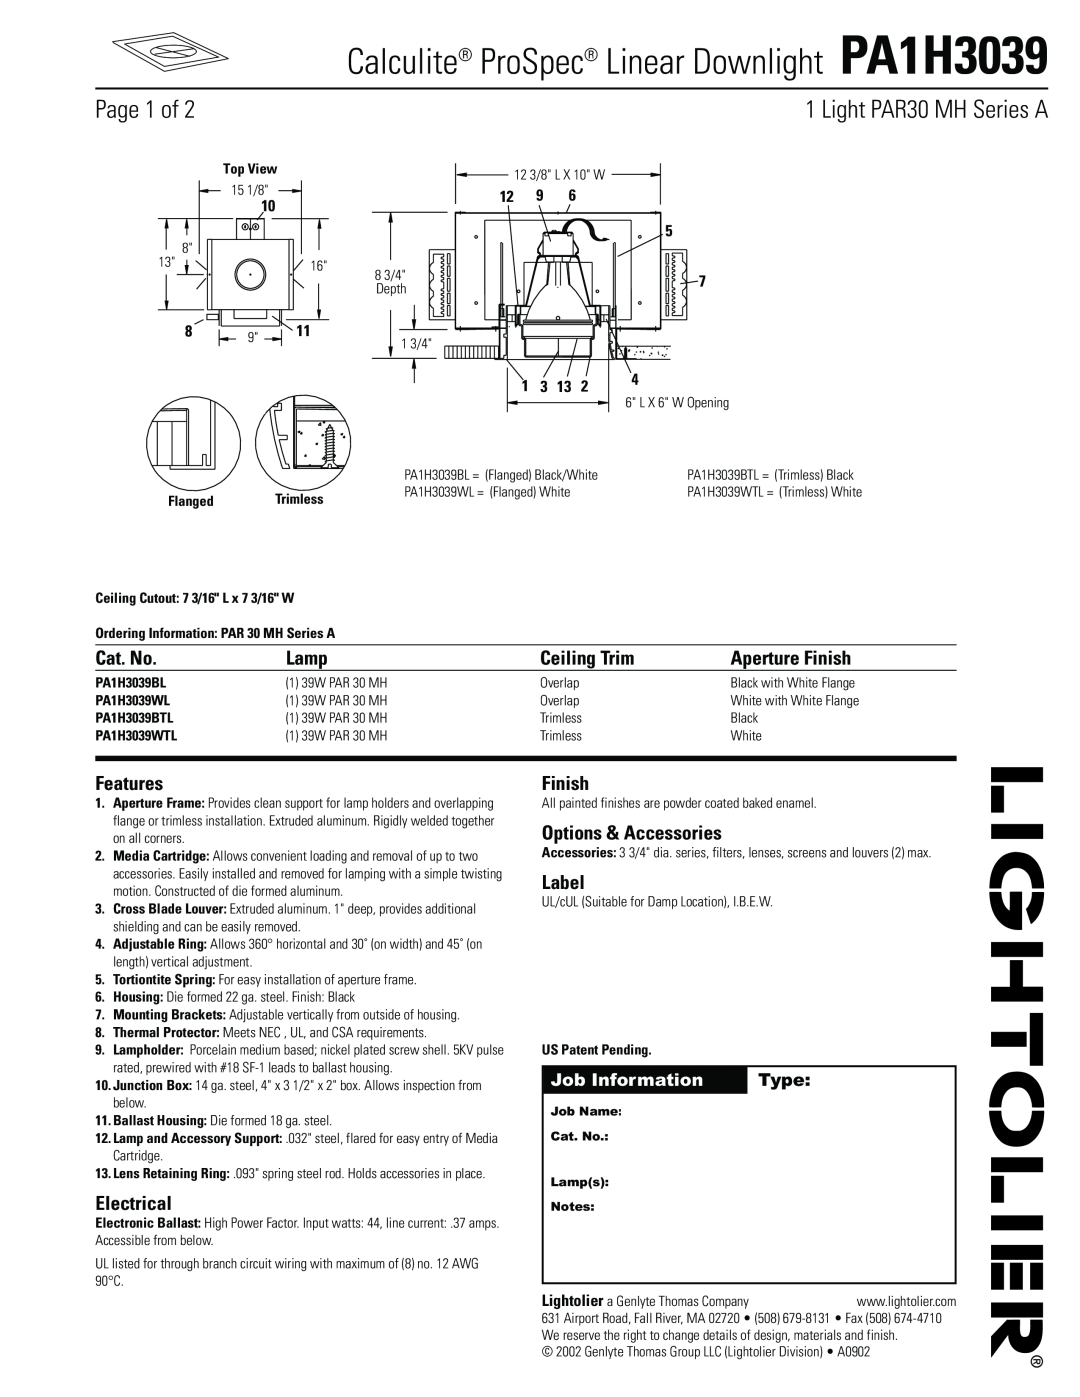 Lightolier manual Calculite ProSpec Linear Downlight PA1H3039, Cat. No, Lamp, Ceiling Trim, Aperture Finish, Features 